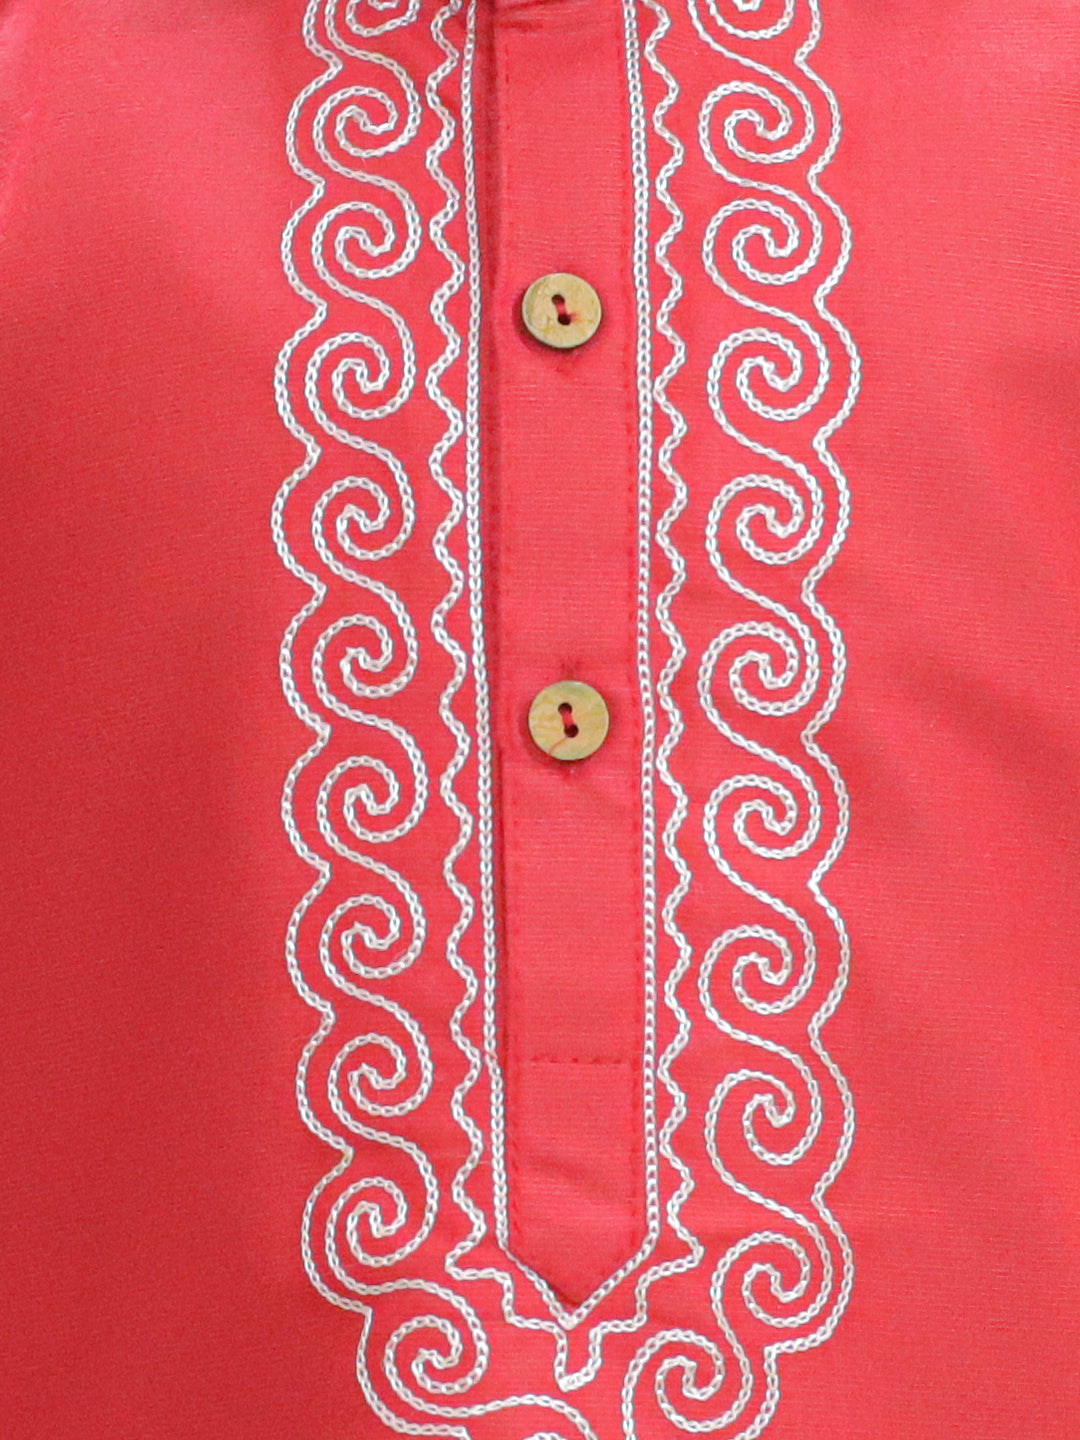 BownBee Boys Ethnic Wear Embroidery Cotton Full Sleeve Kurta Pajama - Red